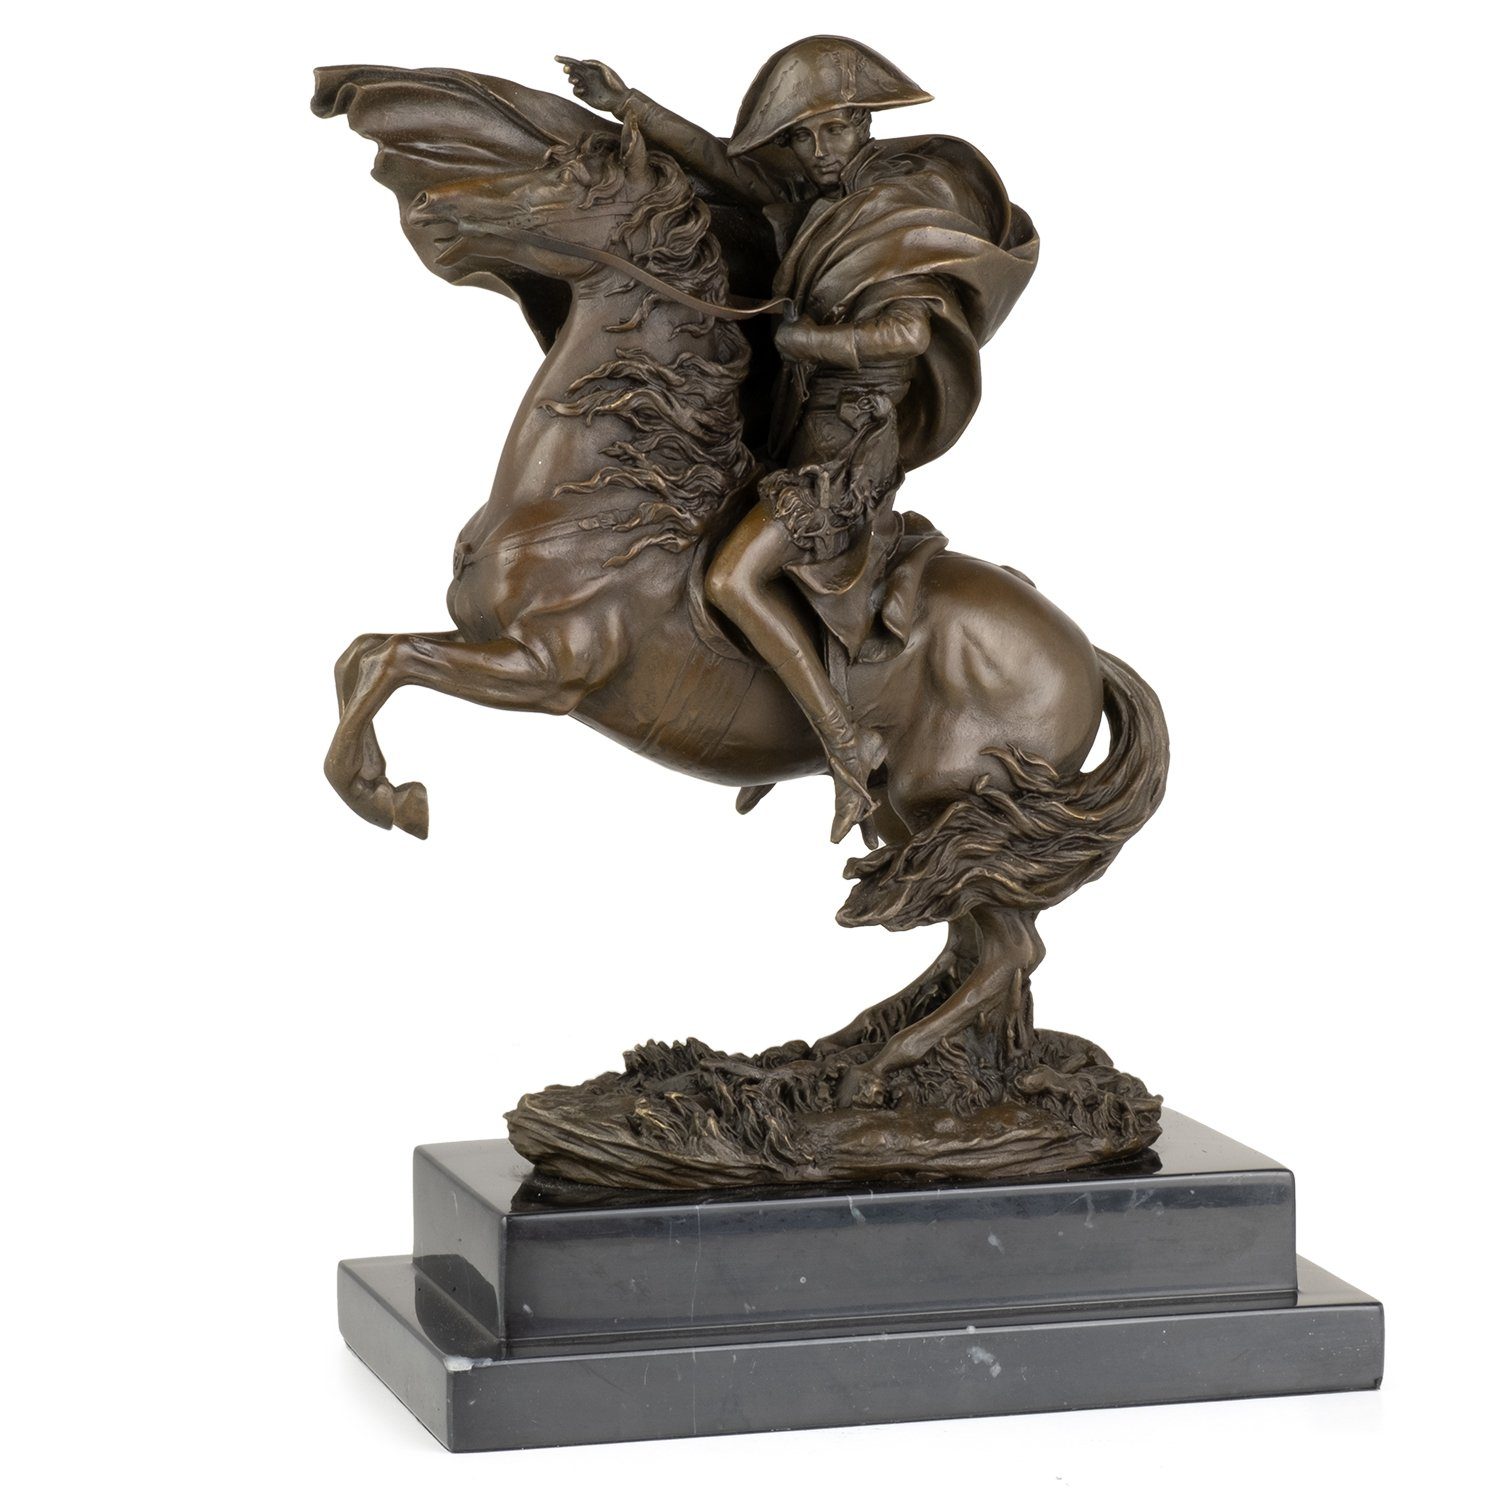 Moritz Napoleon Skulptur Figuren Statue Bonaparte Reiter, Skulpturen Bronzefigur Antik-Stil